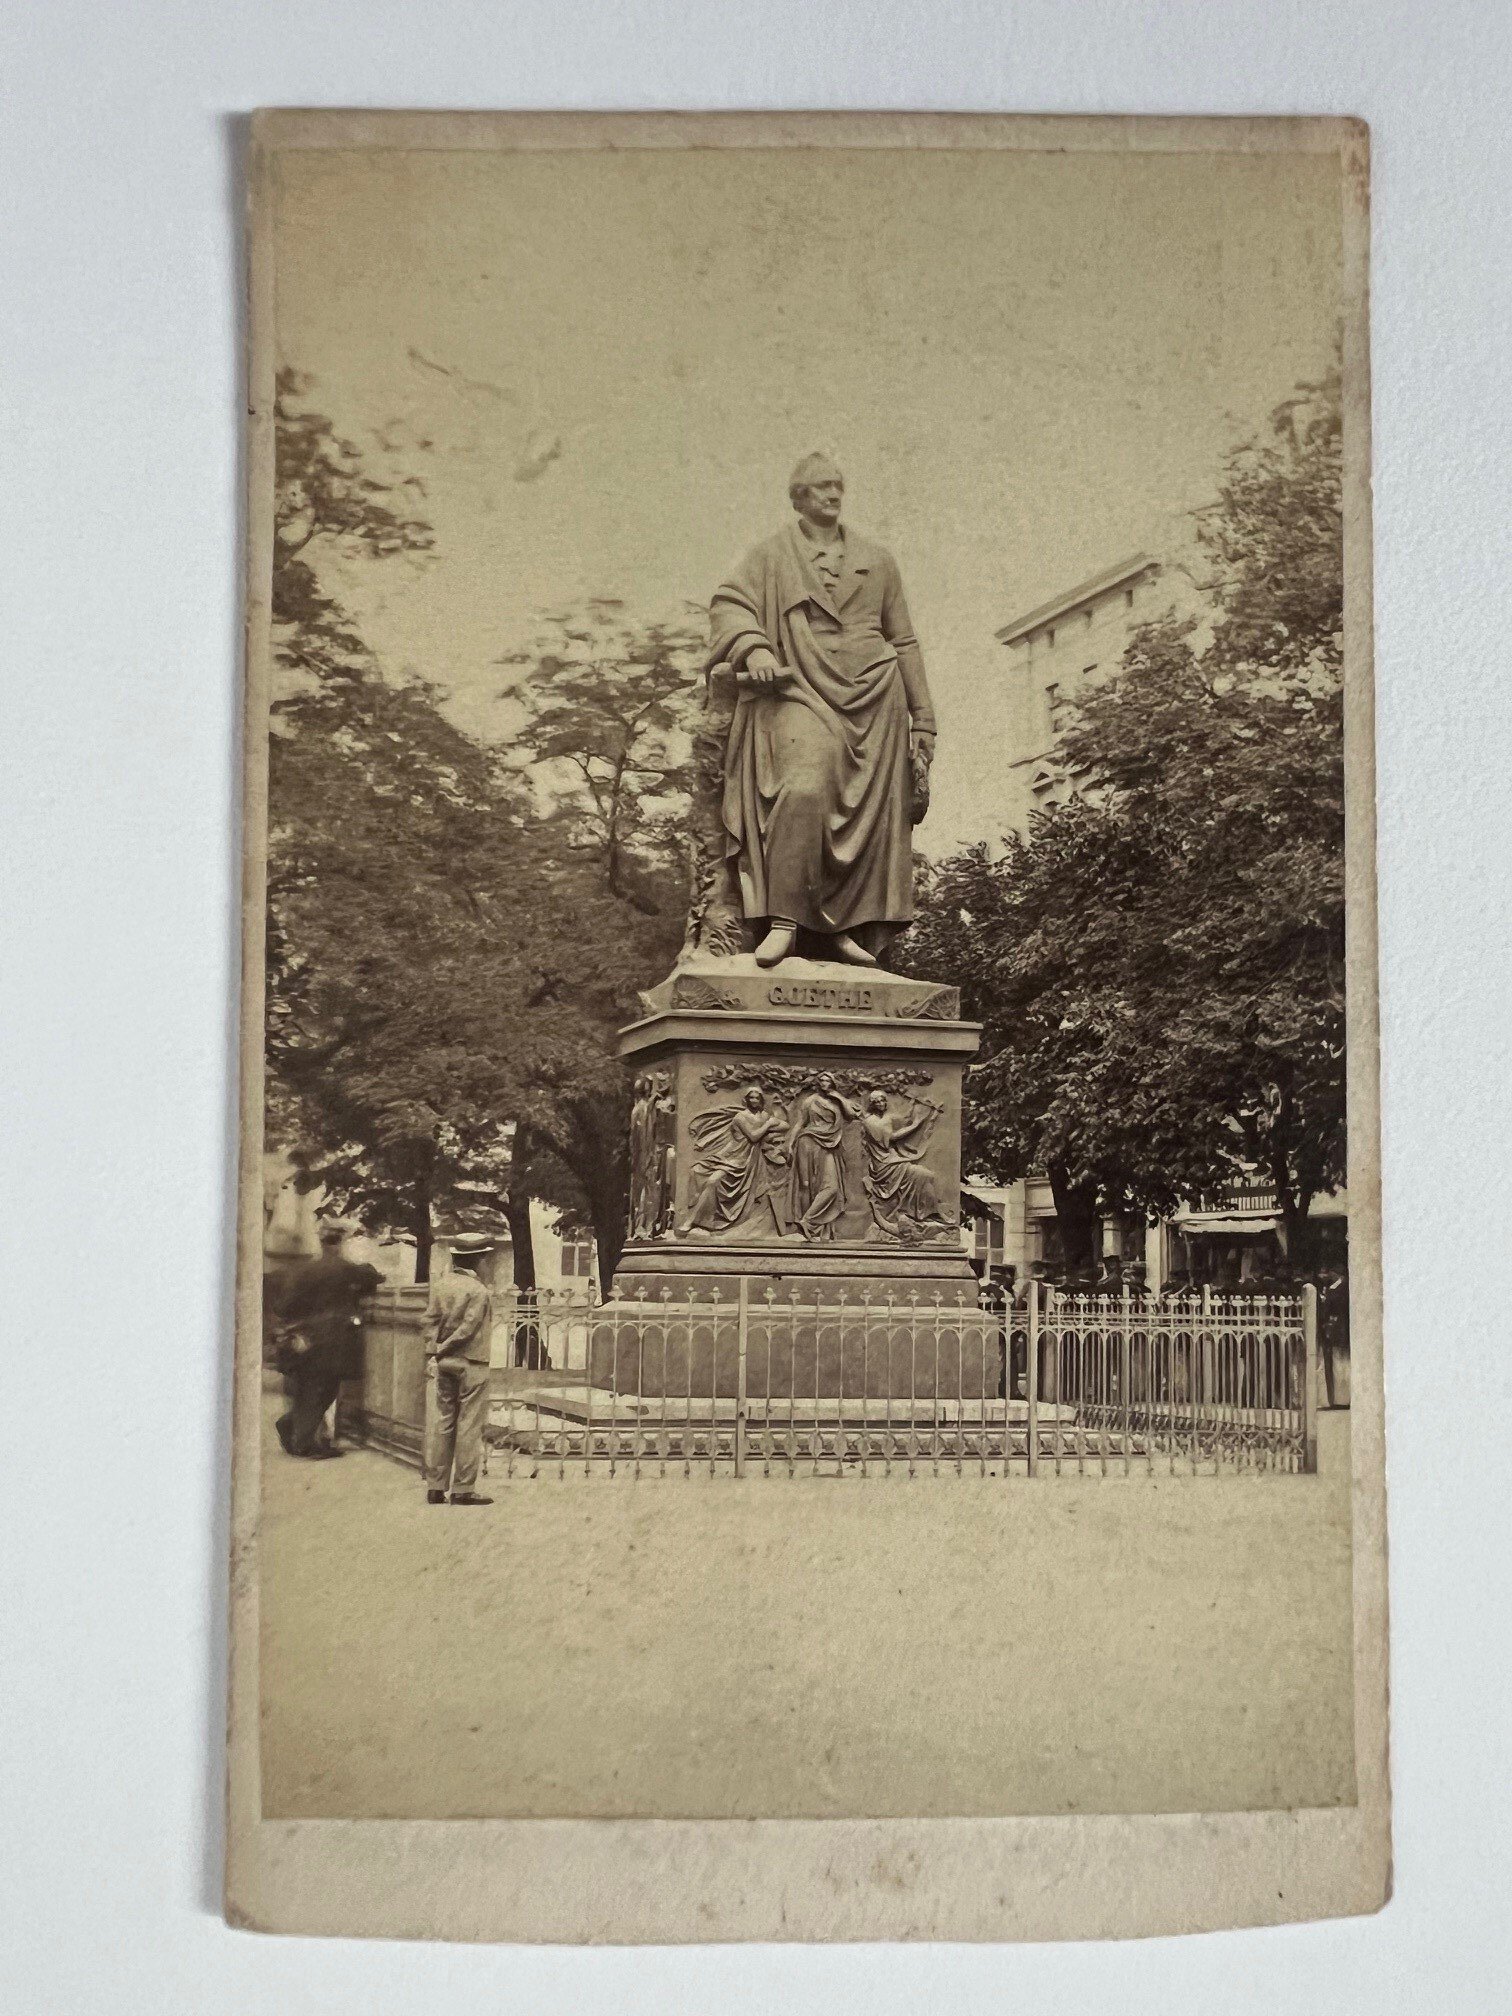 CdV, Theodor Creifelds, Frankfurt, Nr. 267, Göthe-Monument, ca. 1870. (Taunus-Rhein-Main - Regionalgeschichtliche Sammlung Dr. Stefan Naas CC BY-NC-SA)